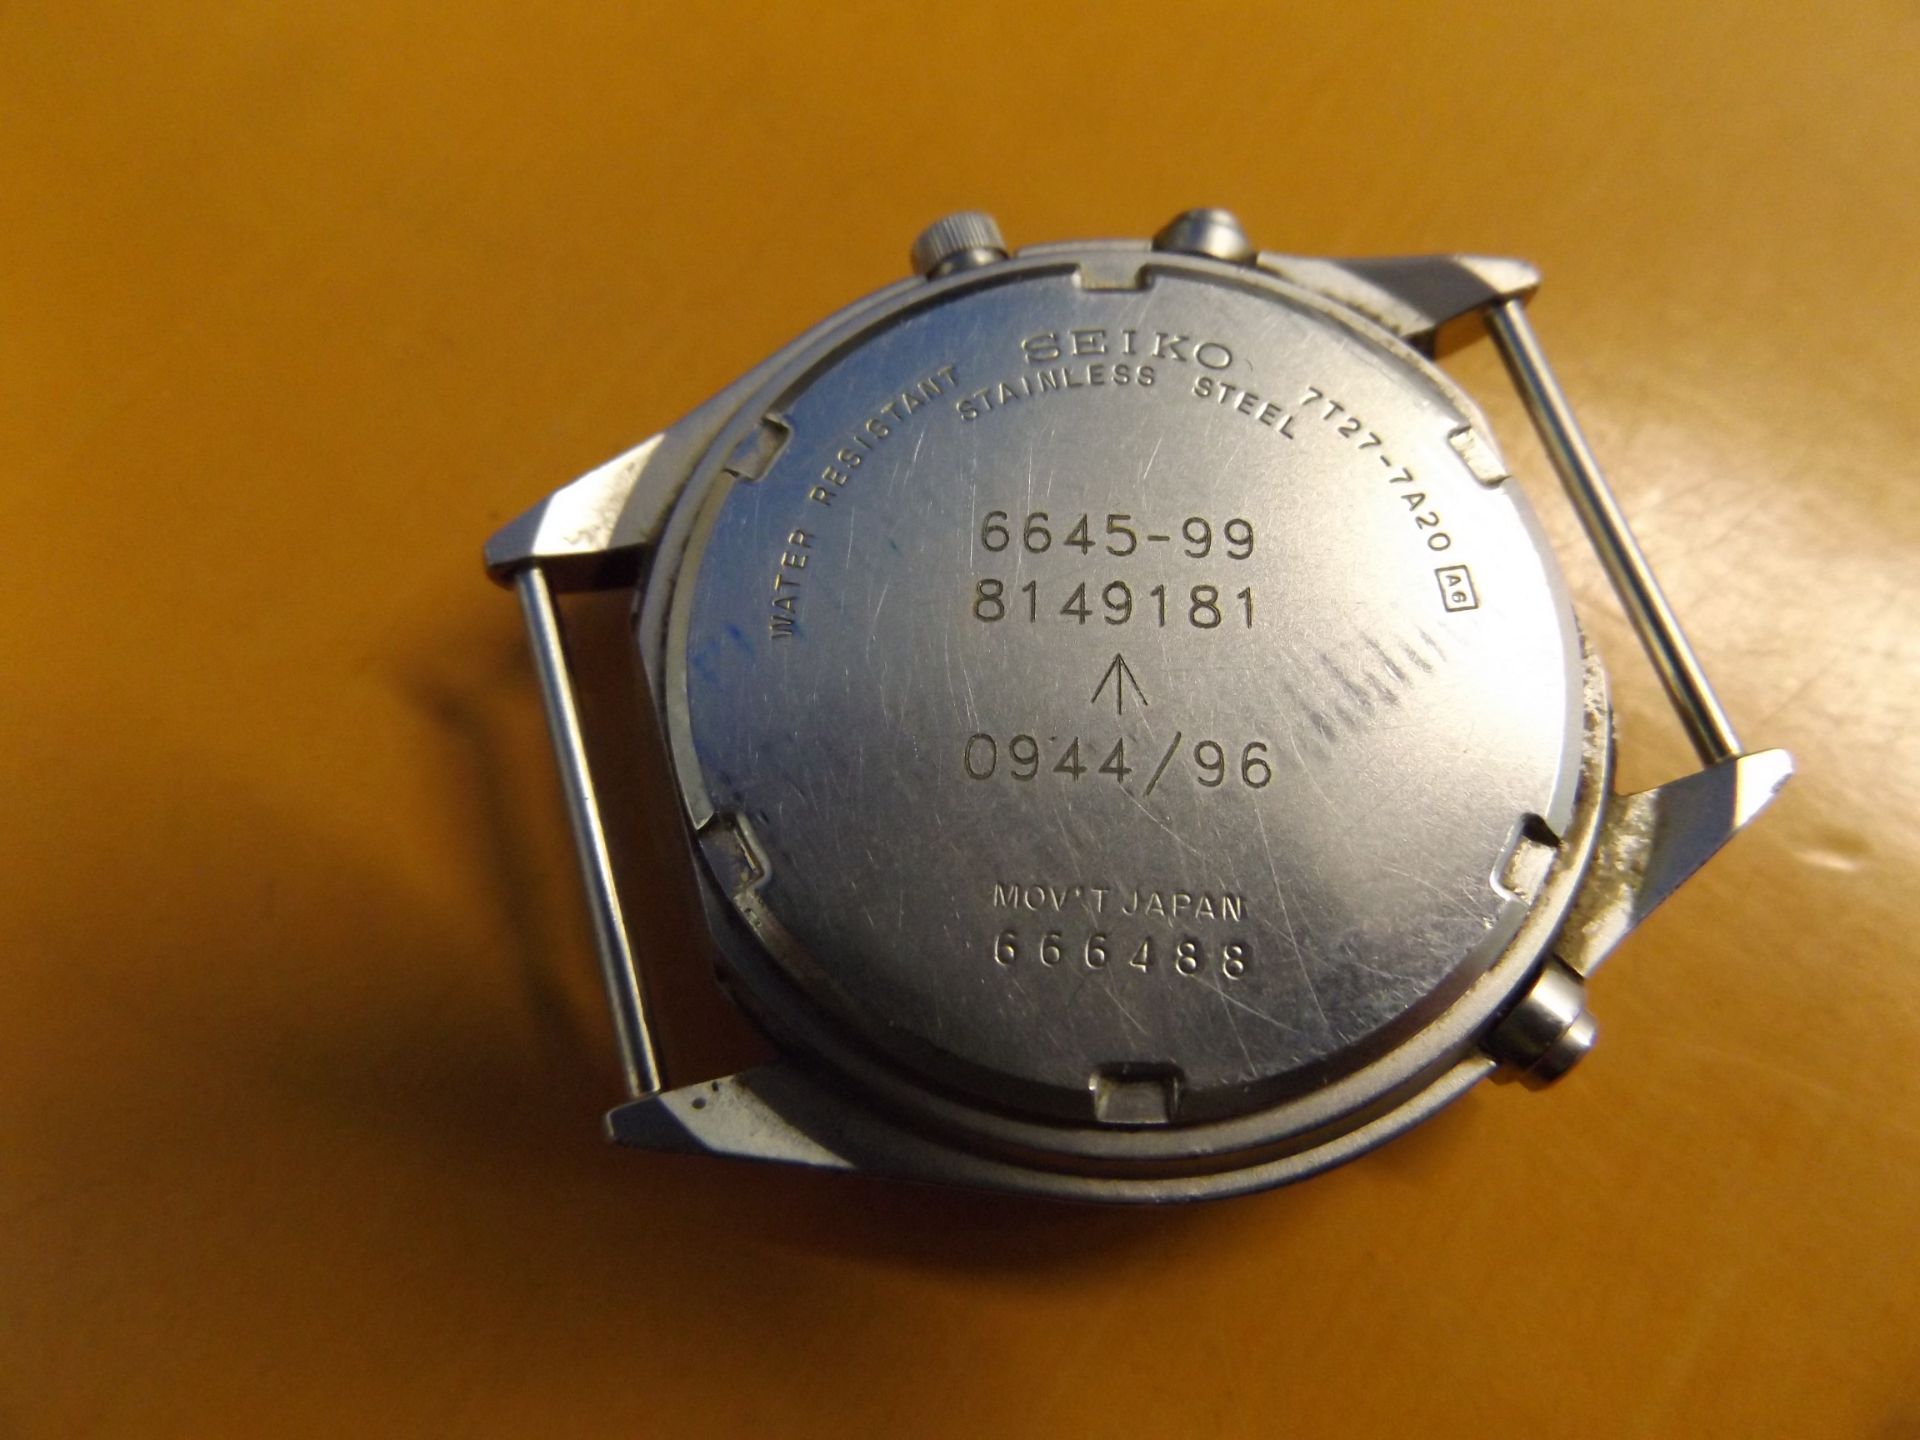 Seiko Pilots Chronograph generation 2 - Bild 4 aus 4